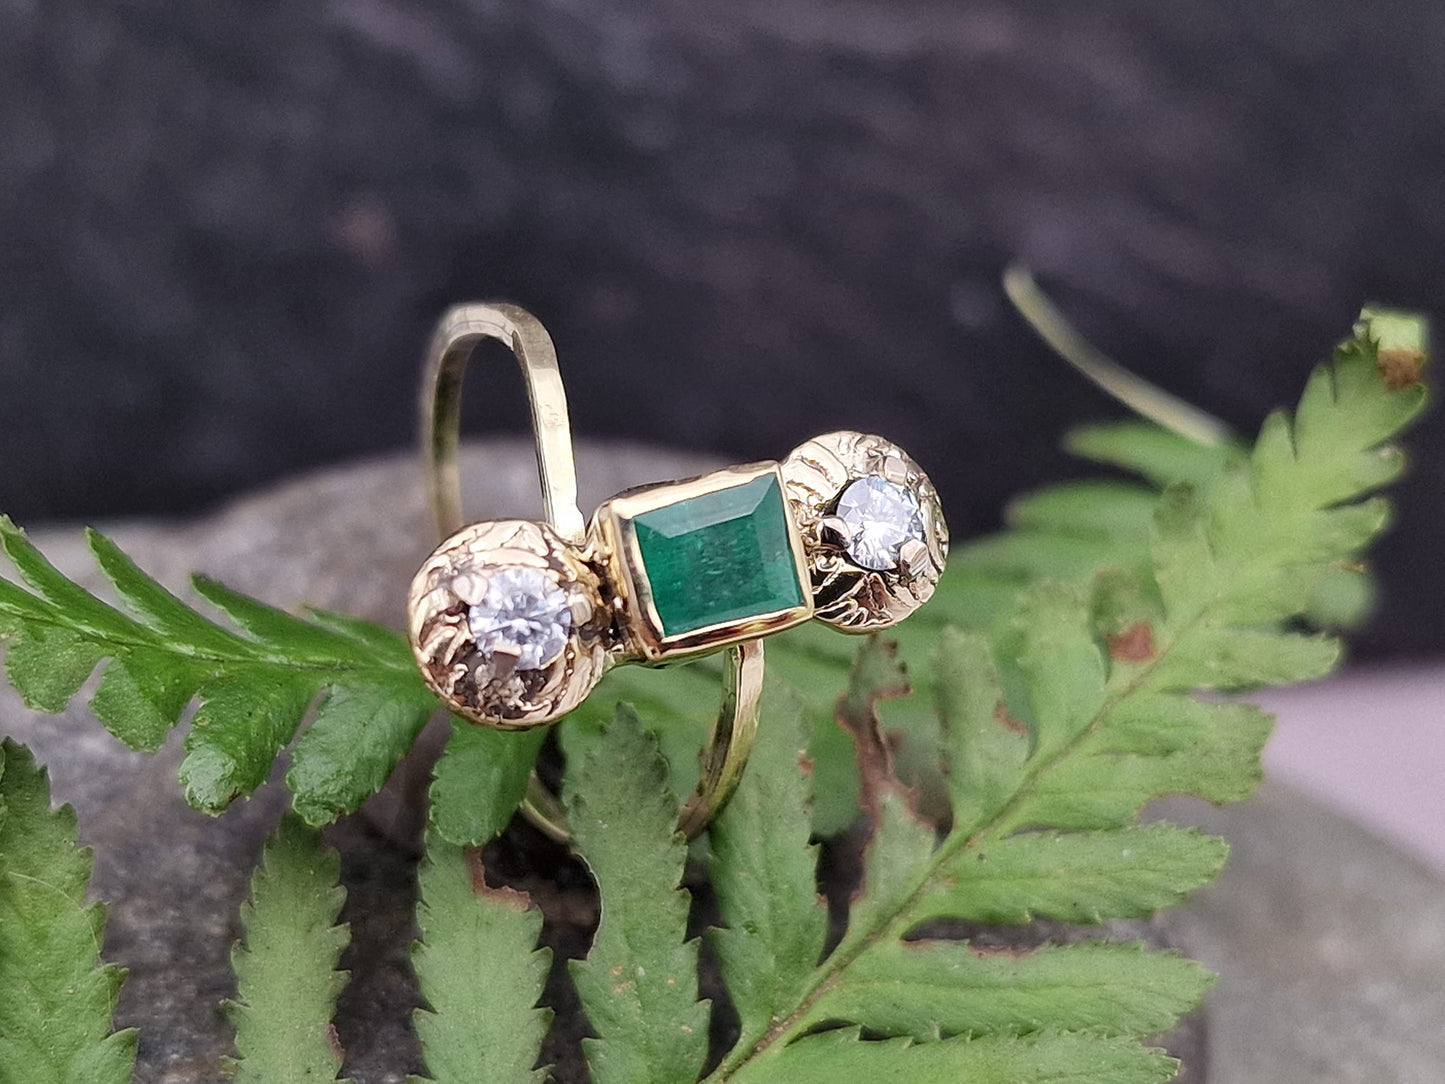 LeoLars-PABE Smaragd Design Ring, Gr. 56 (18), aus 585er Gelb Gold mit zwei Moissaniten, handgeschmiedet, Unikat, Handarbeit